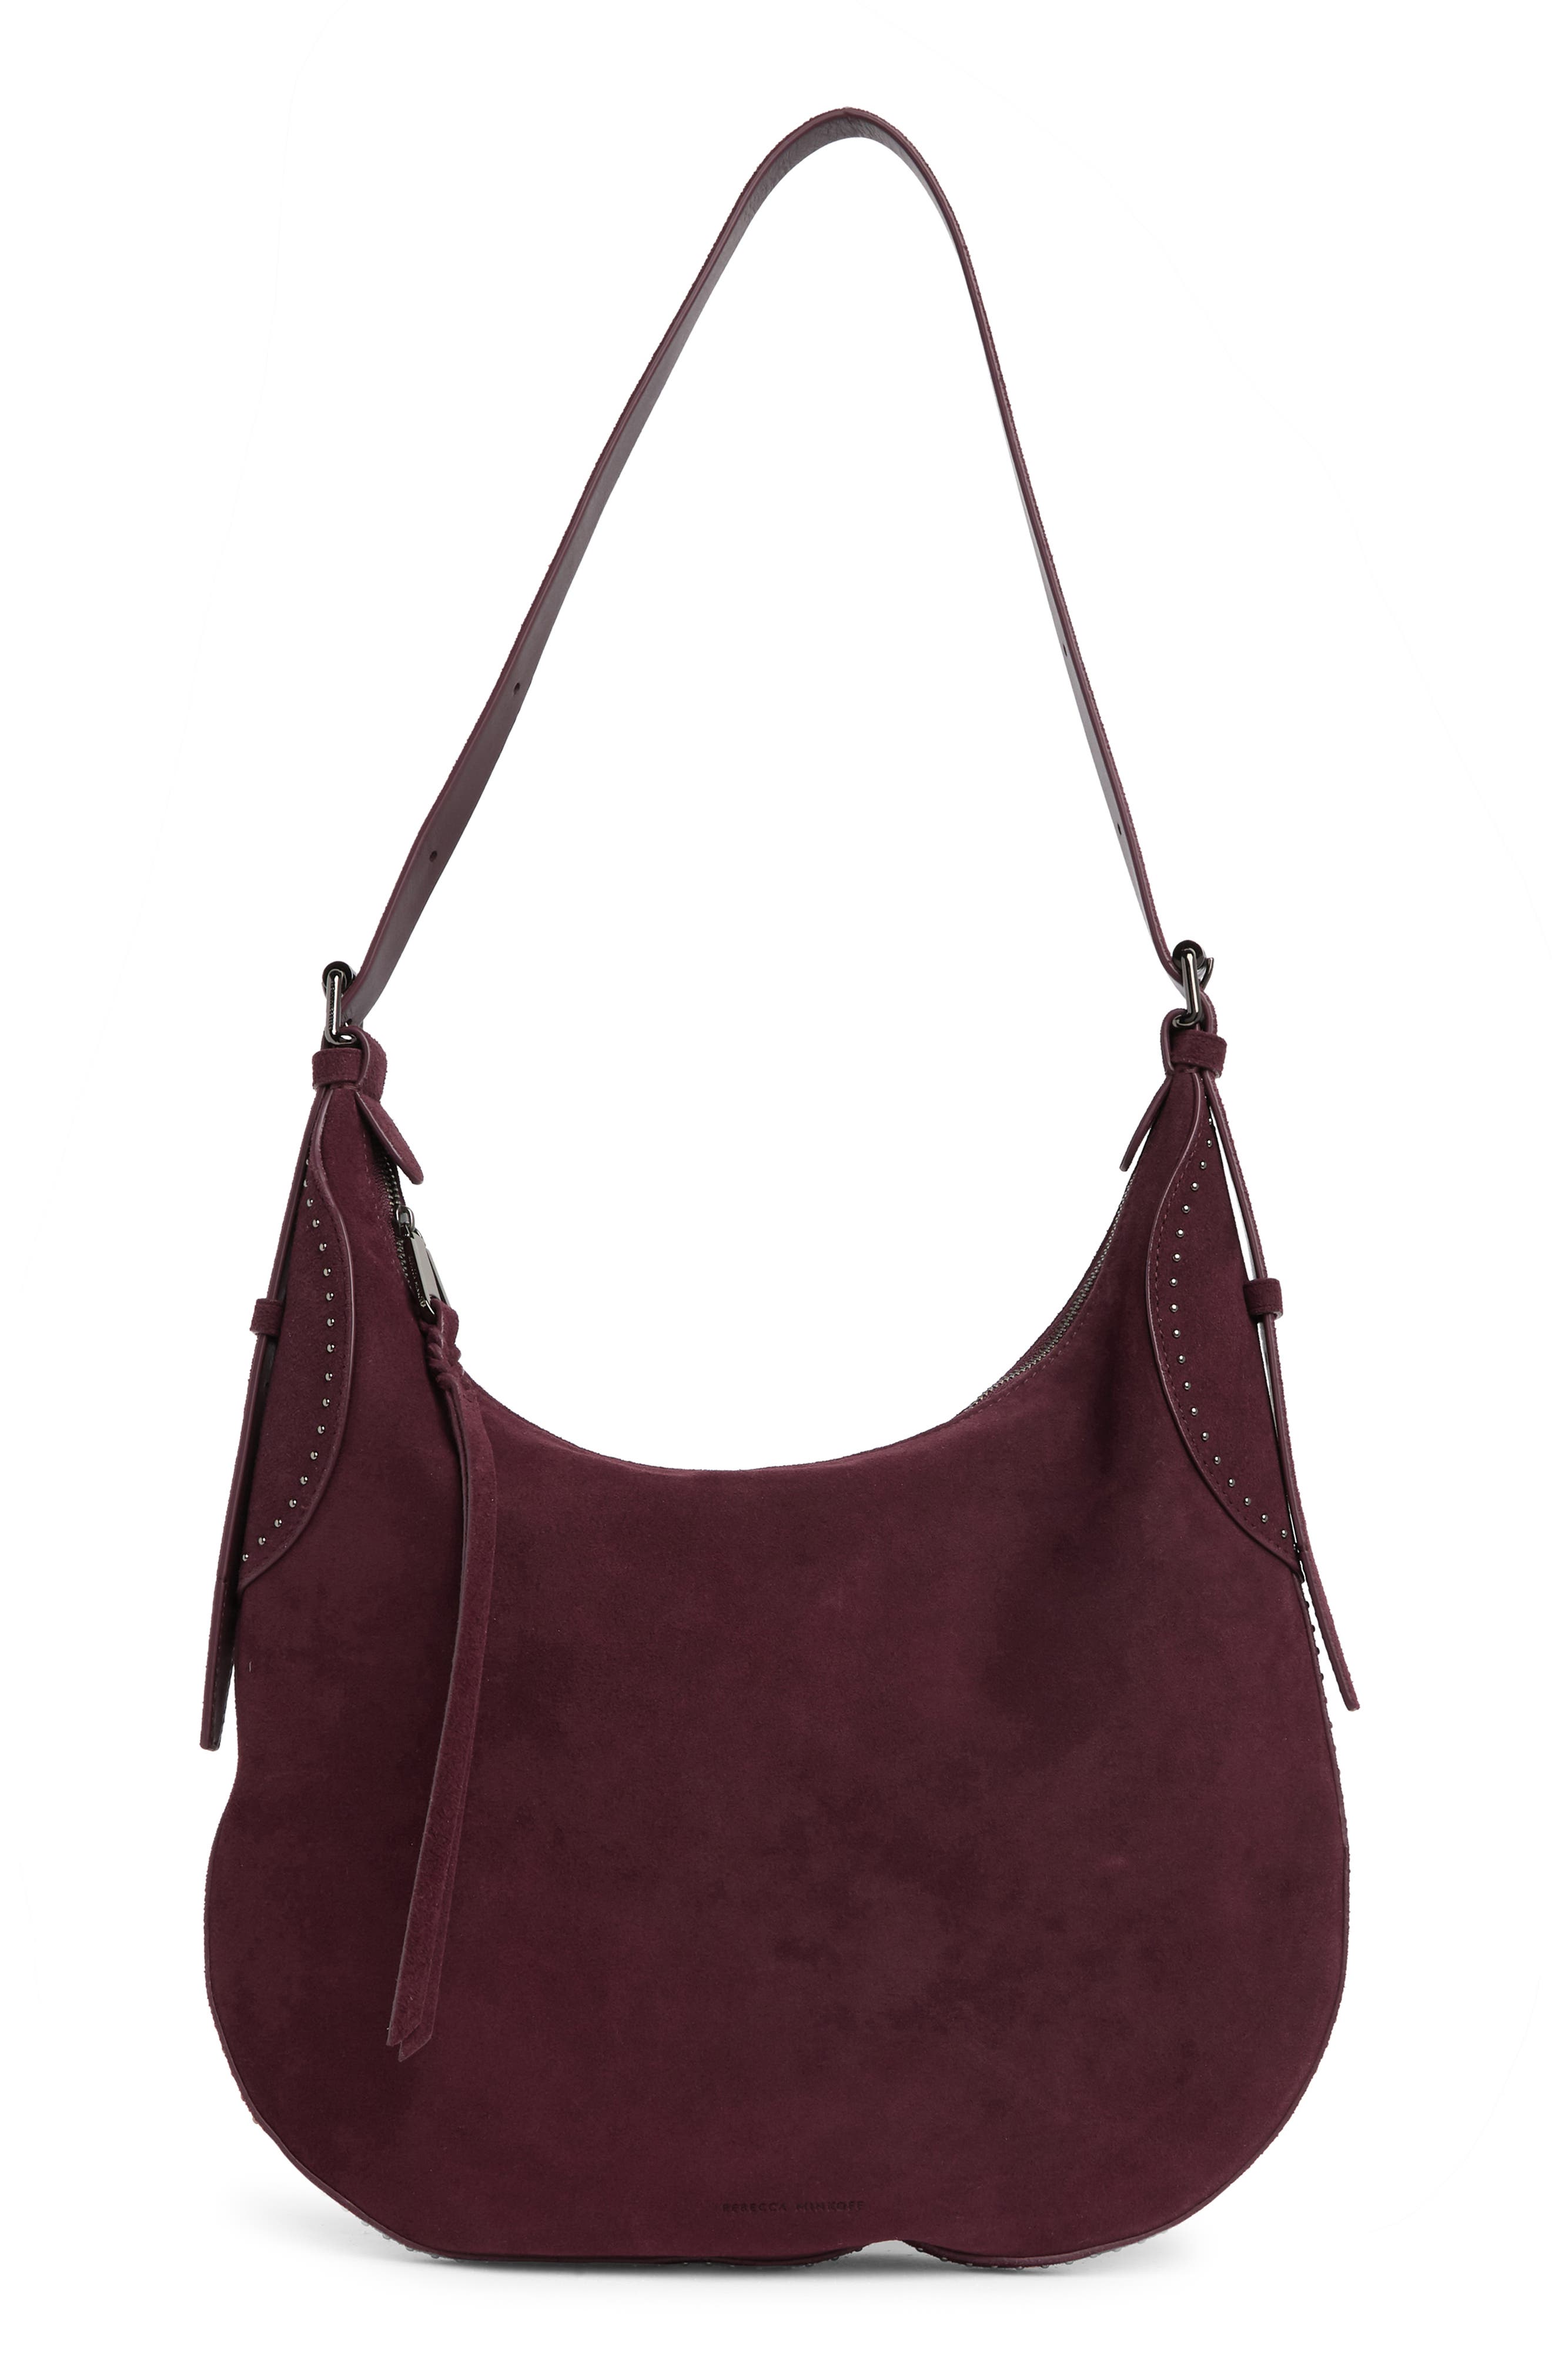 Studded Hobo Shoulder Handbag by Handbags For All